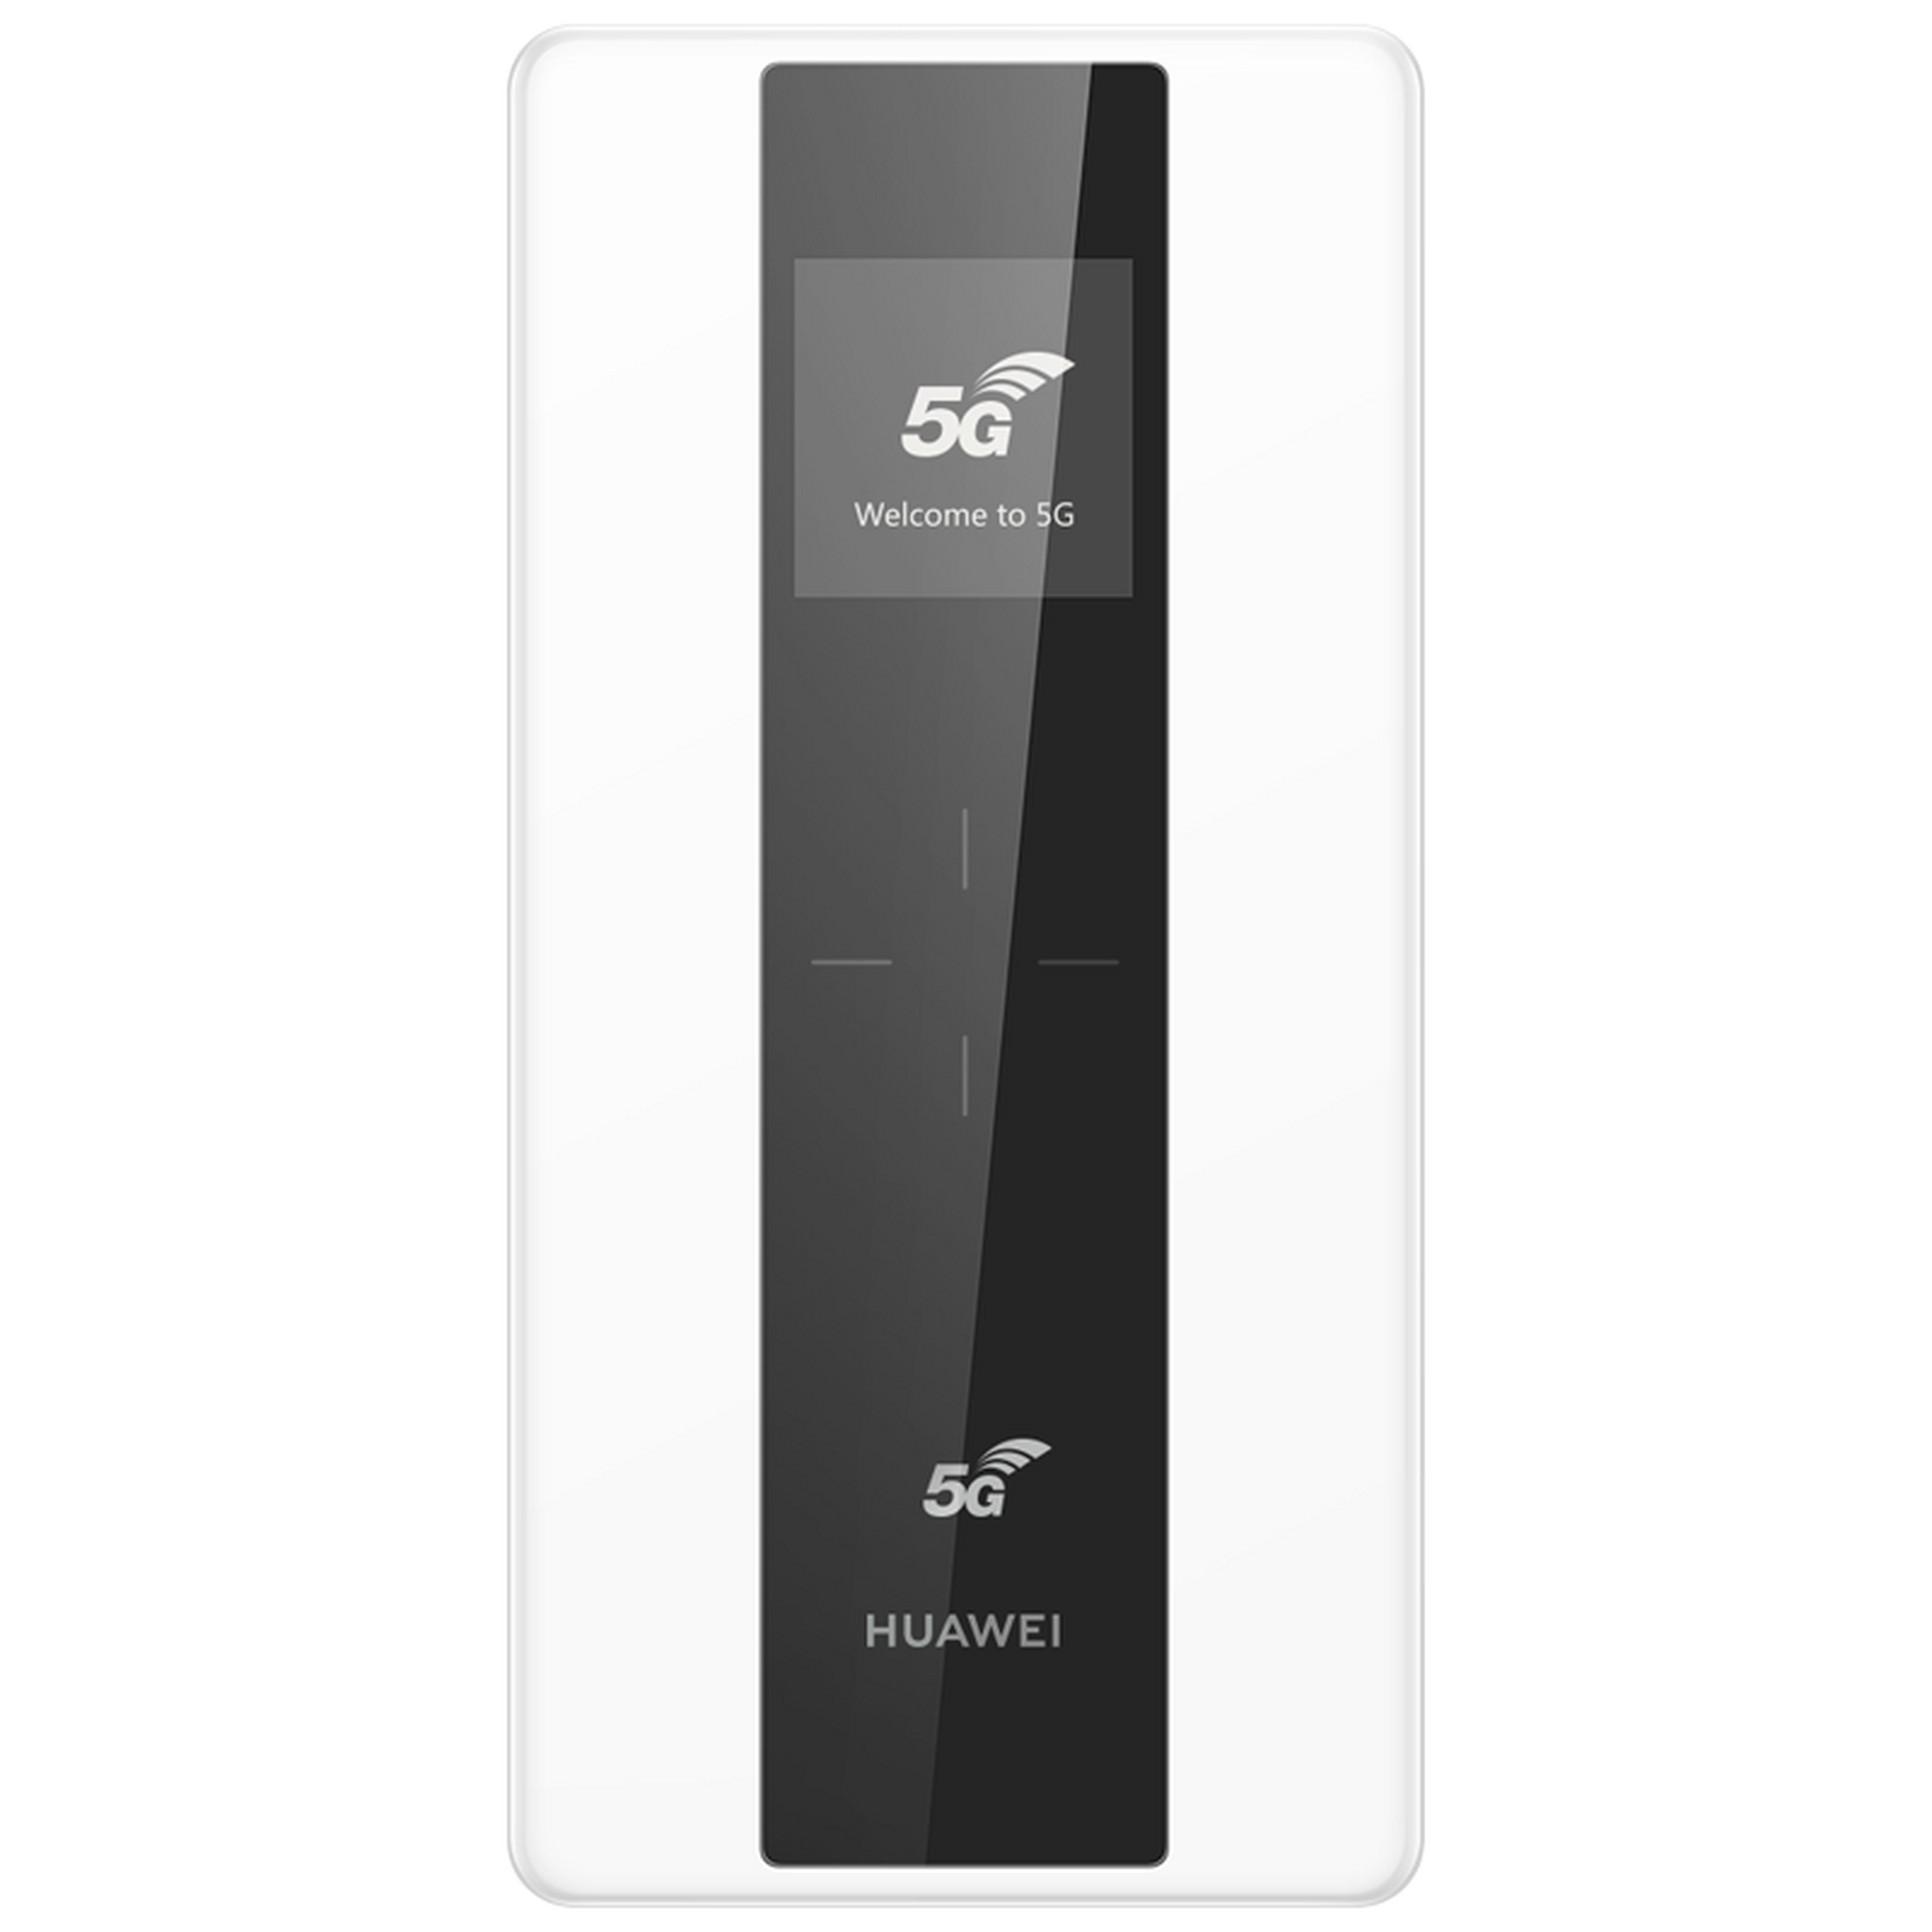 Huawei 5G Mobile WiFi (E6878-870) - White